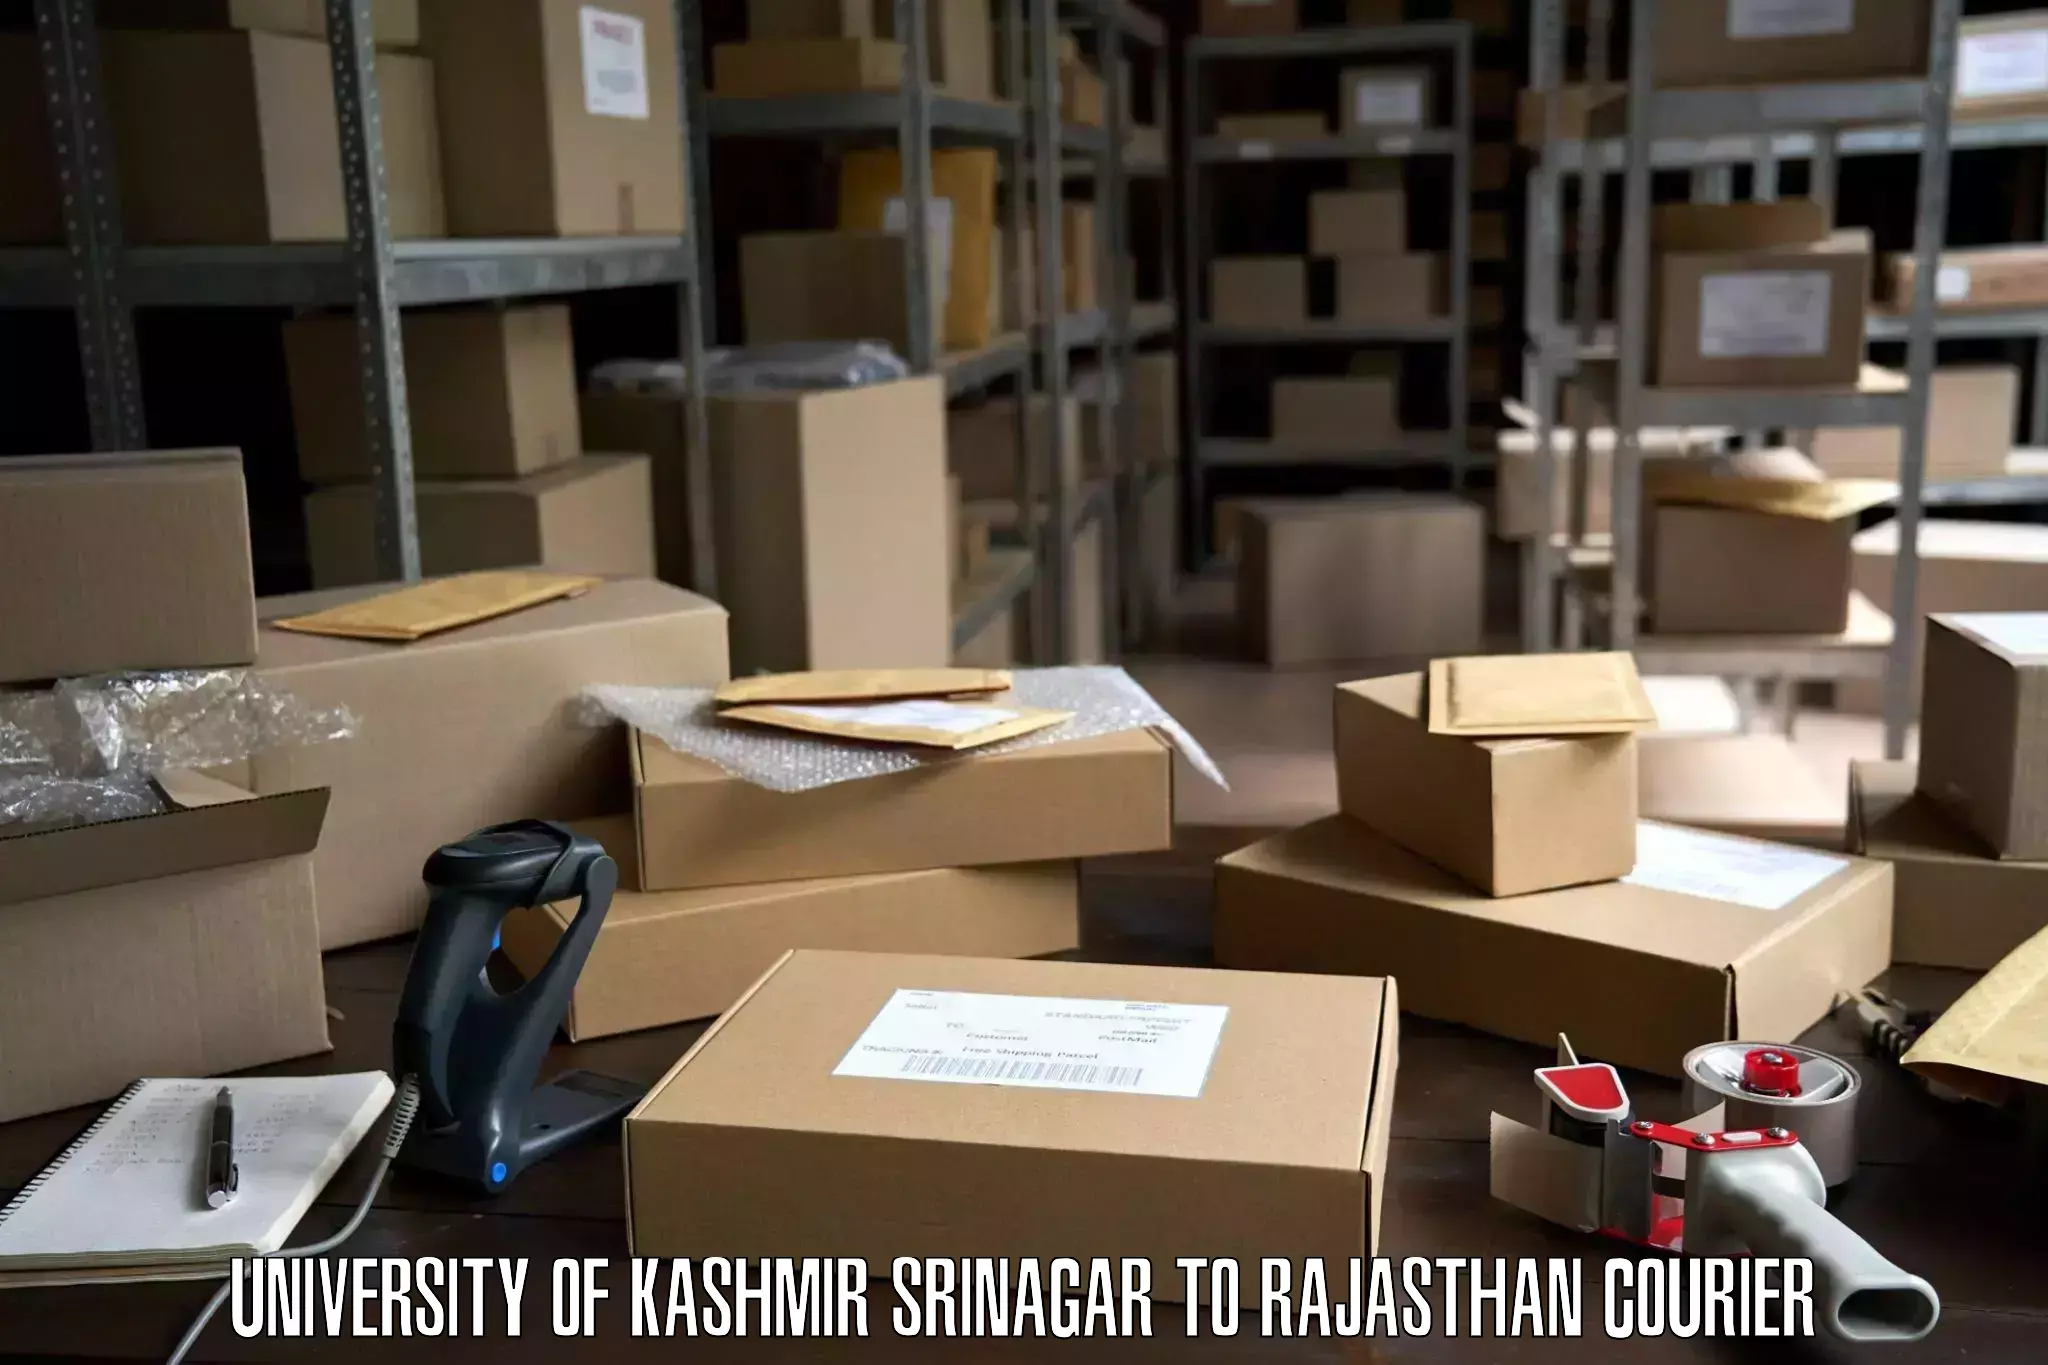 Professional movers and packers University of Kashmir Srinagar to Jodhpur